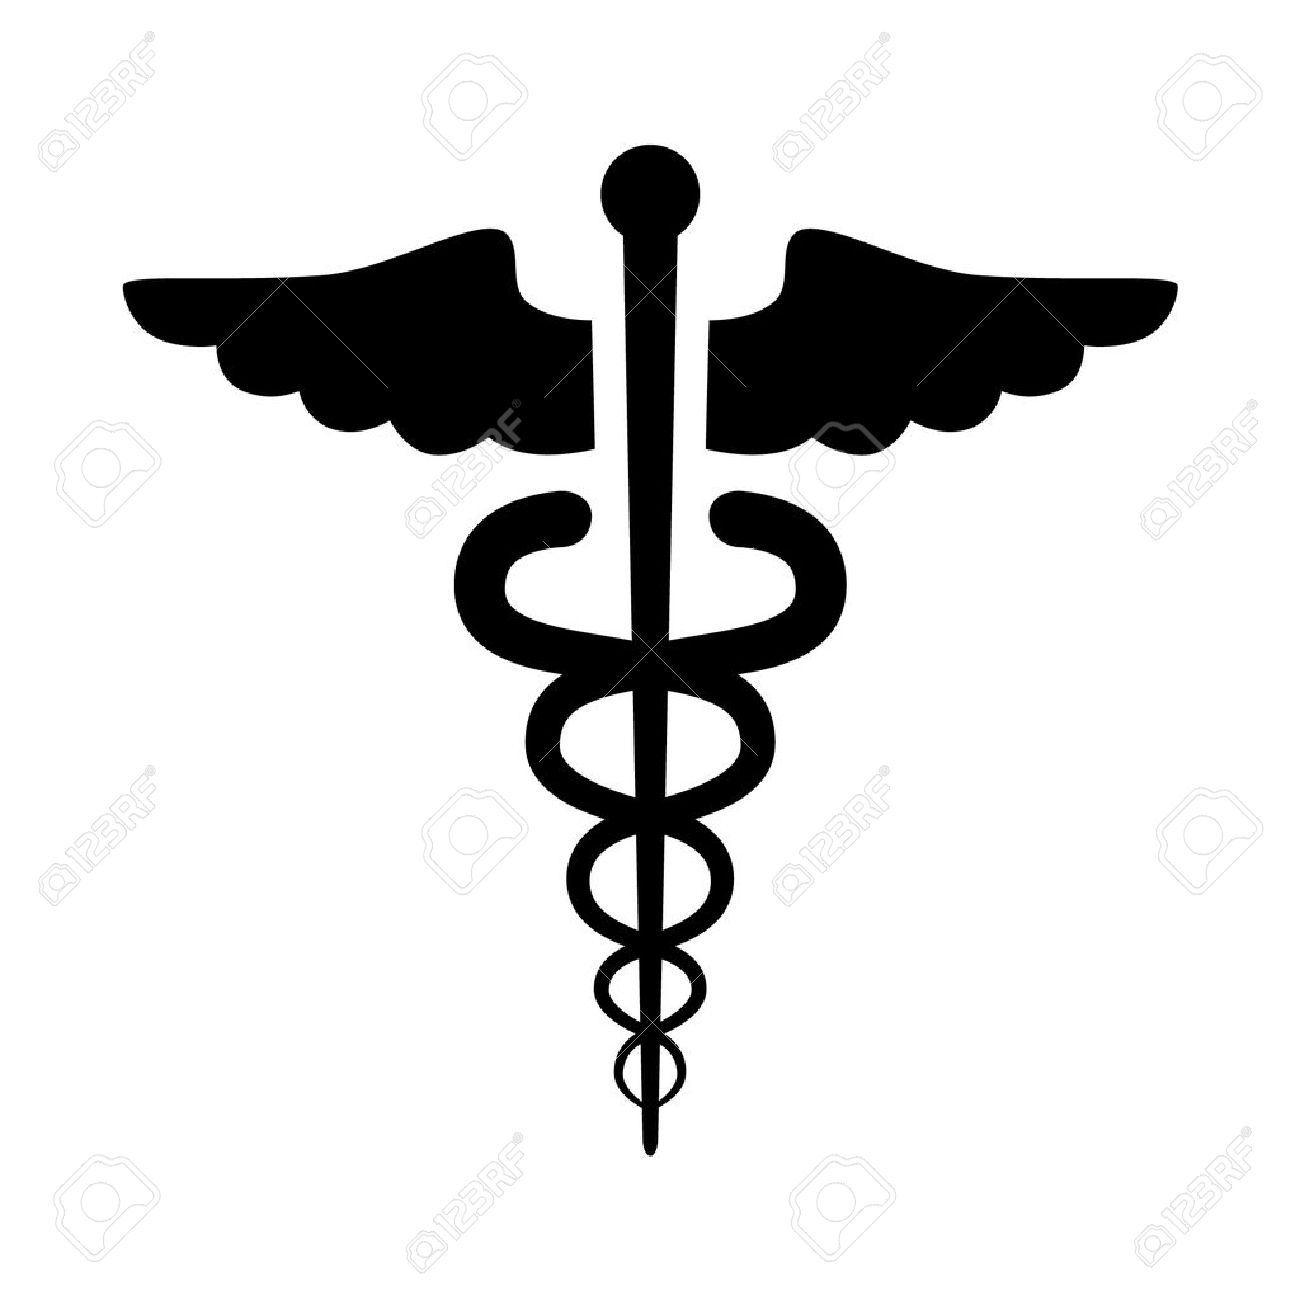 Caduceus medical symbol emblem healthcare flat icon for medical...